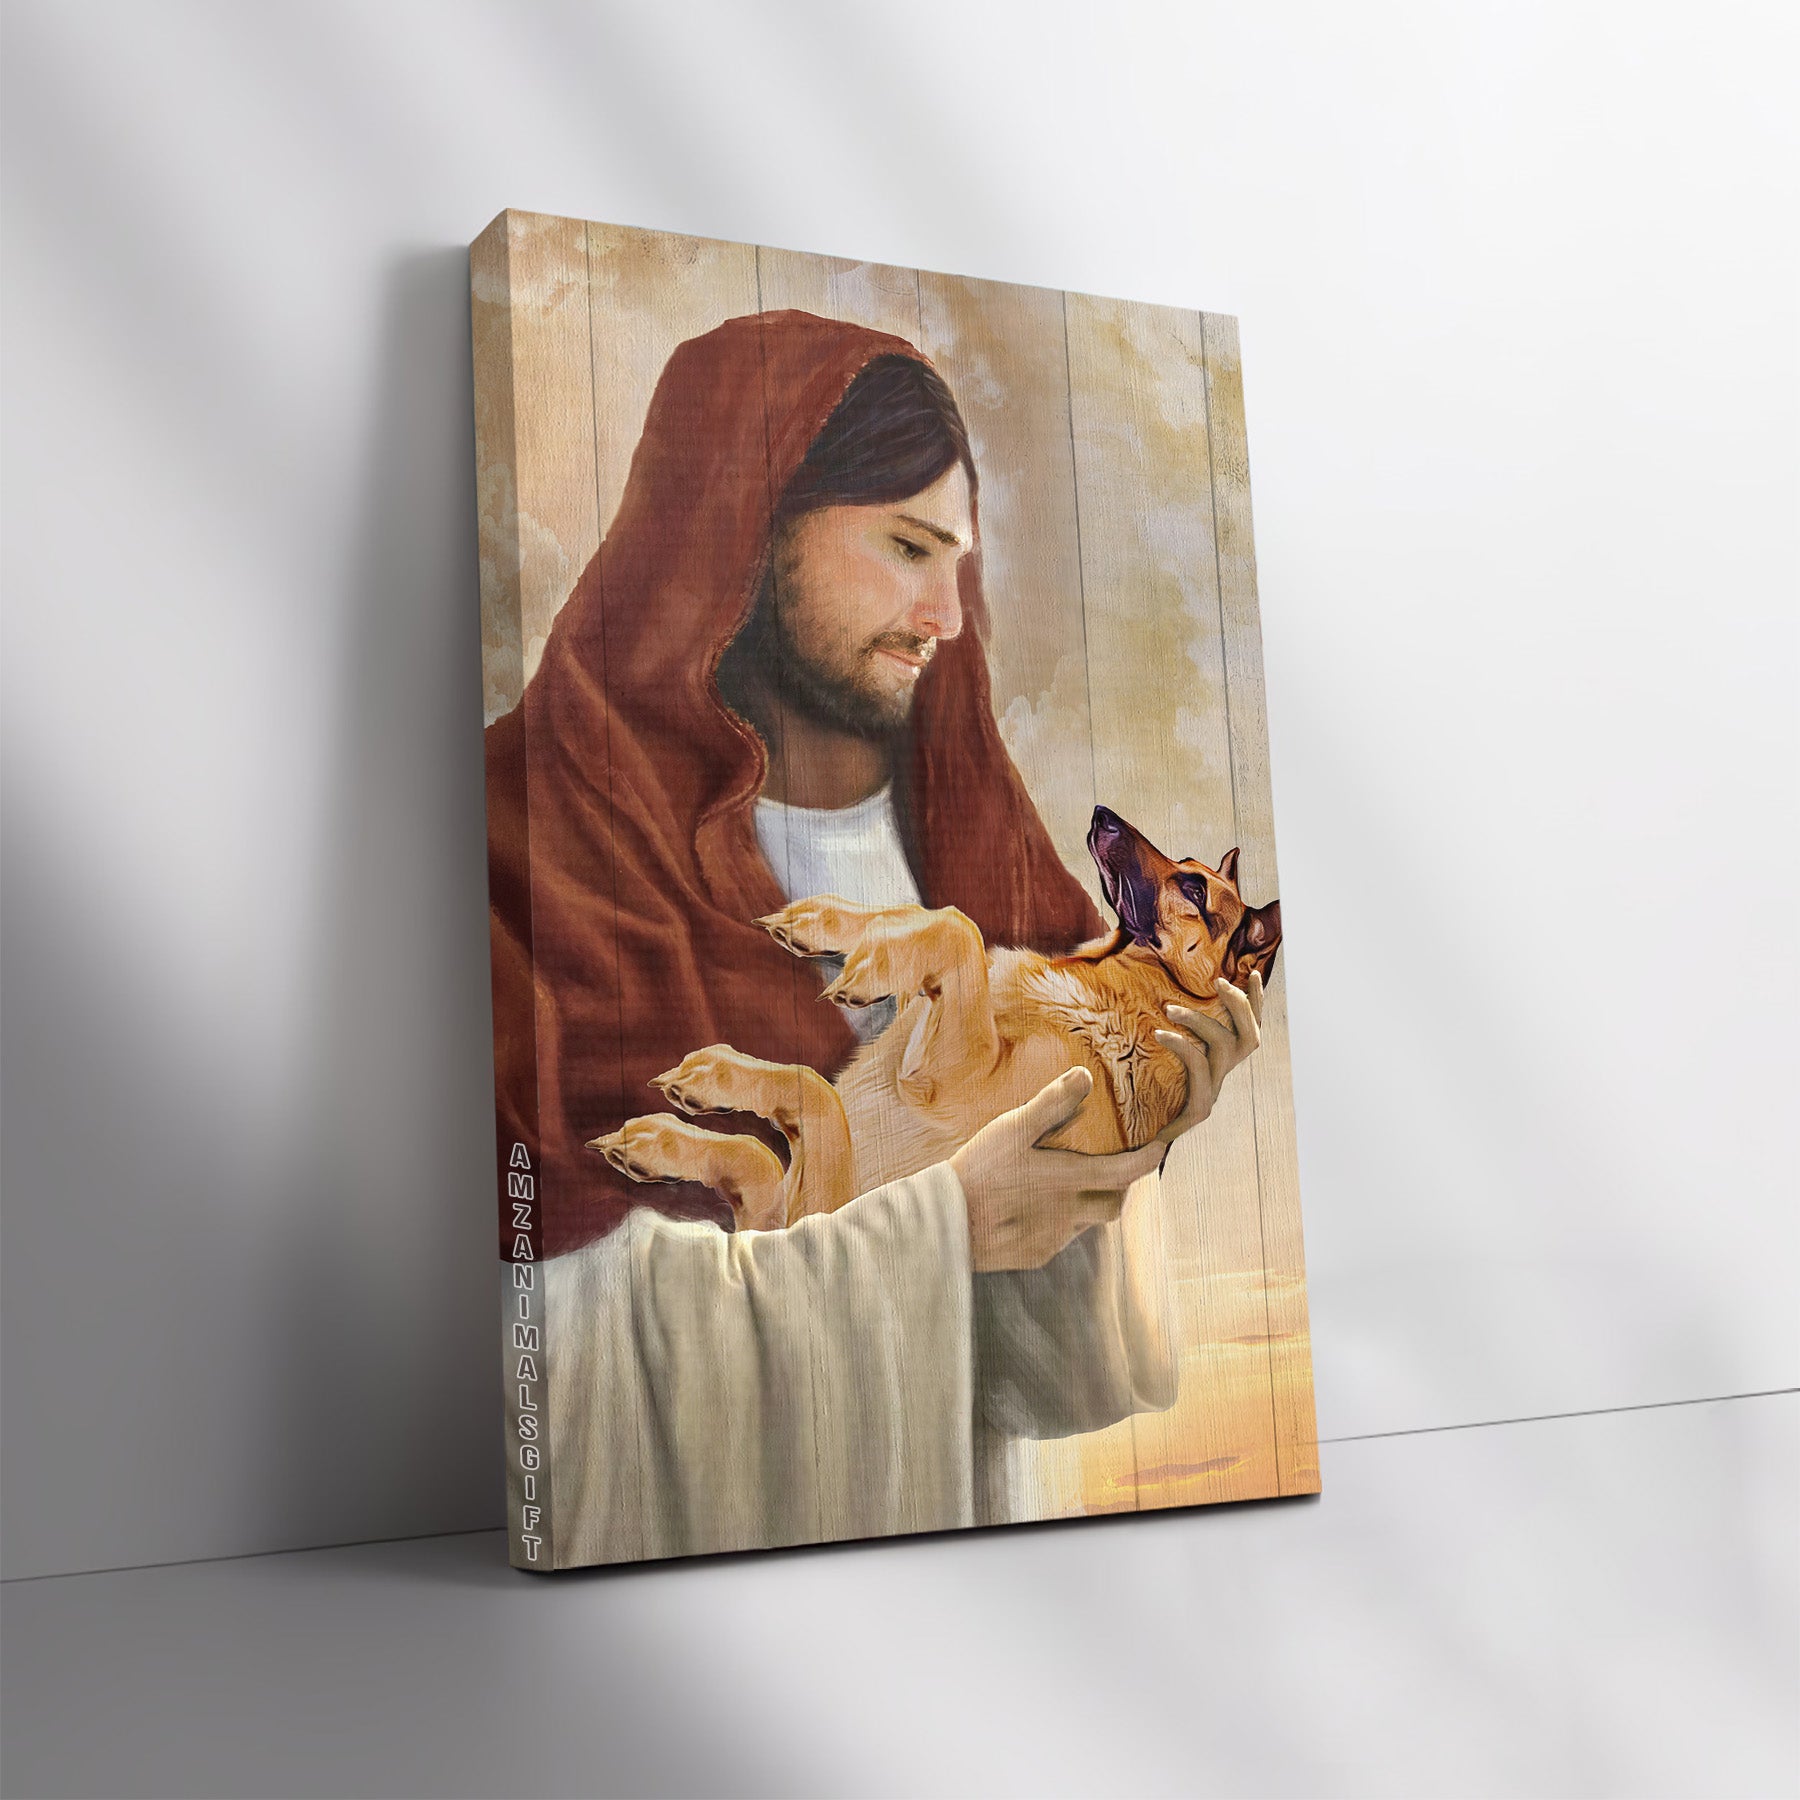 German Shepherd & Jesus Premium Wrapped Portrait Canvas - Little German Shepherd, The World In His Arm, Jesus Artwork - Gift For Christian, Dog Lovers